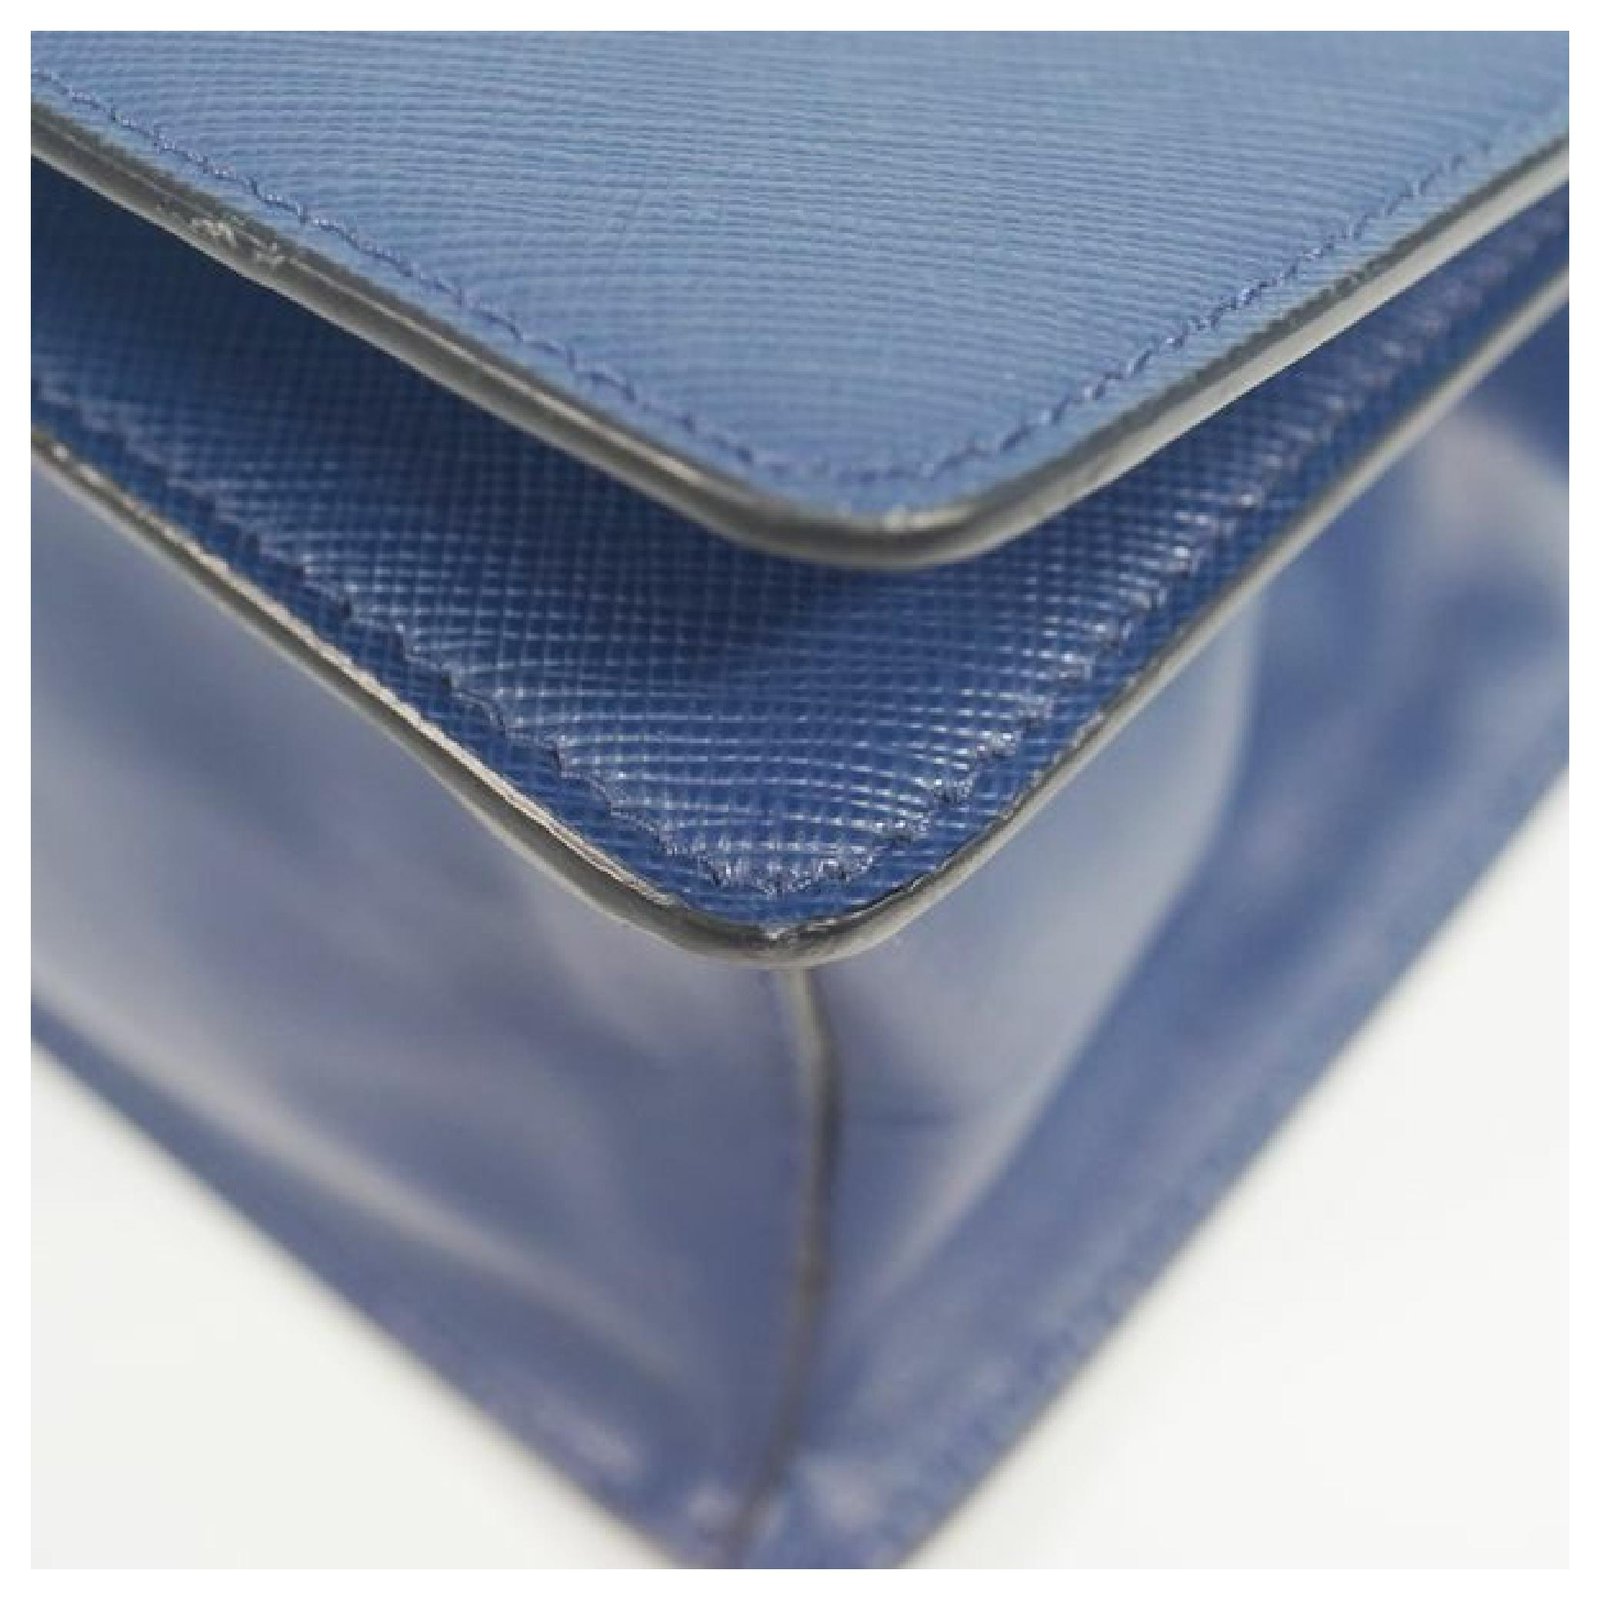 Saffiano leather handbag Prada Blue in Leather - 10887561